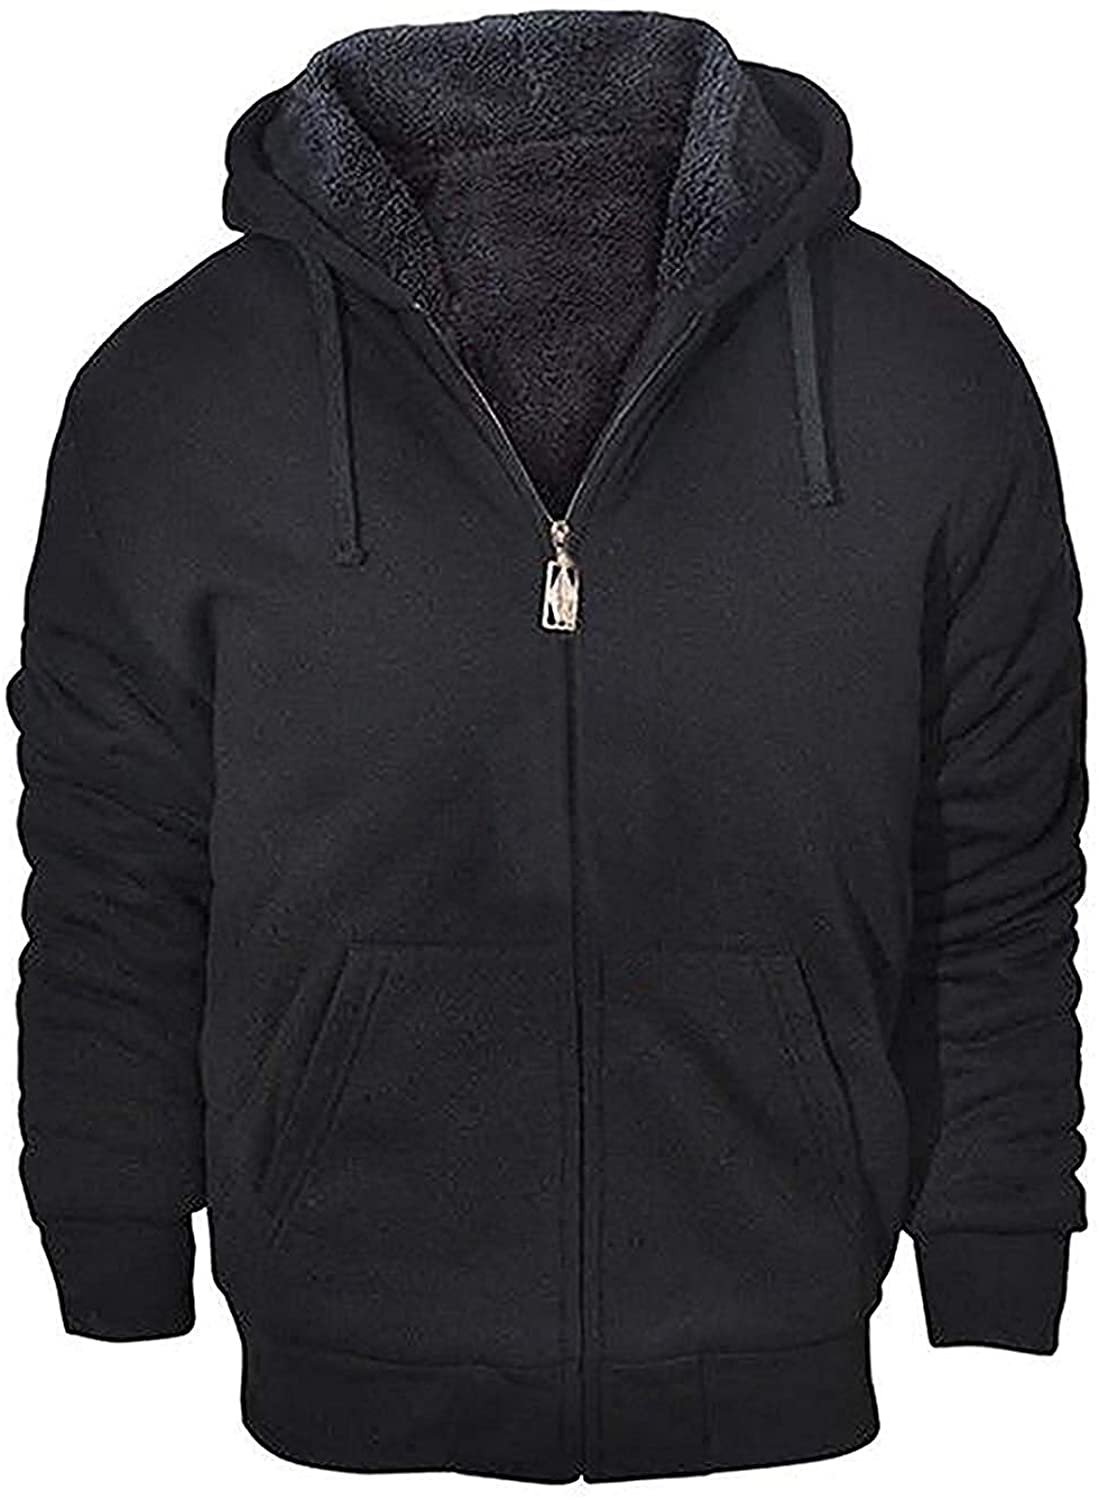 Full Zip Up Thick Sherpa Lined SCODI Hoodies for Men Heavyweight Fleece Sweatshirt 